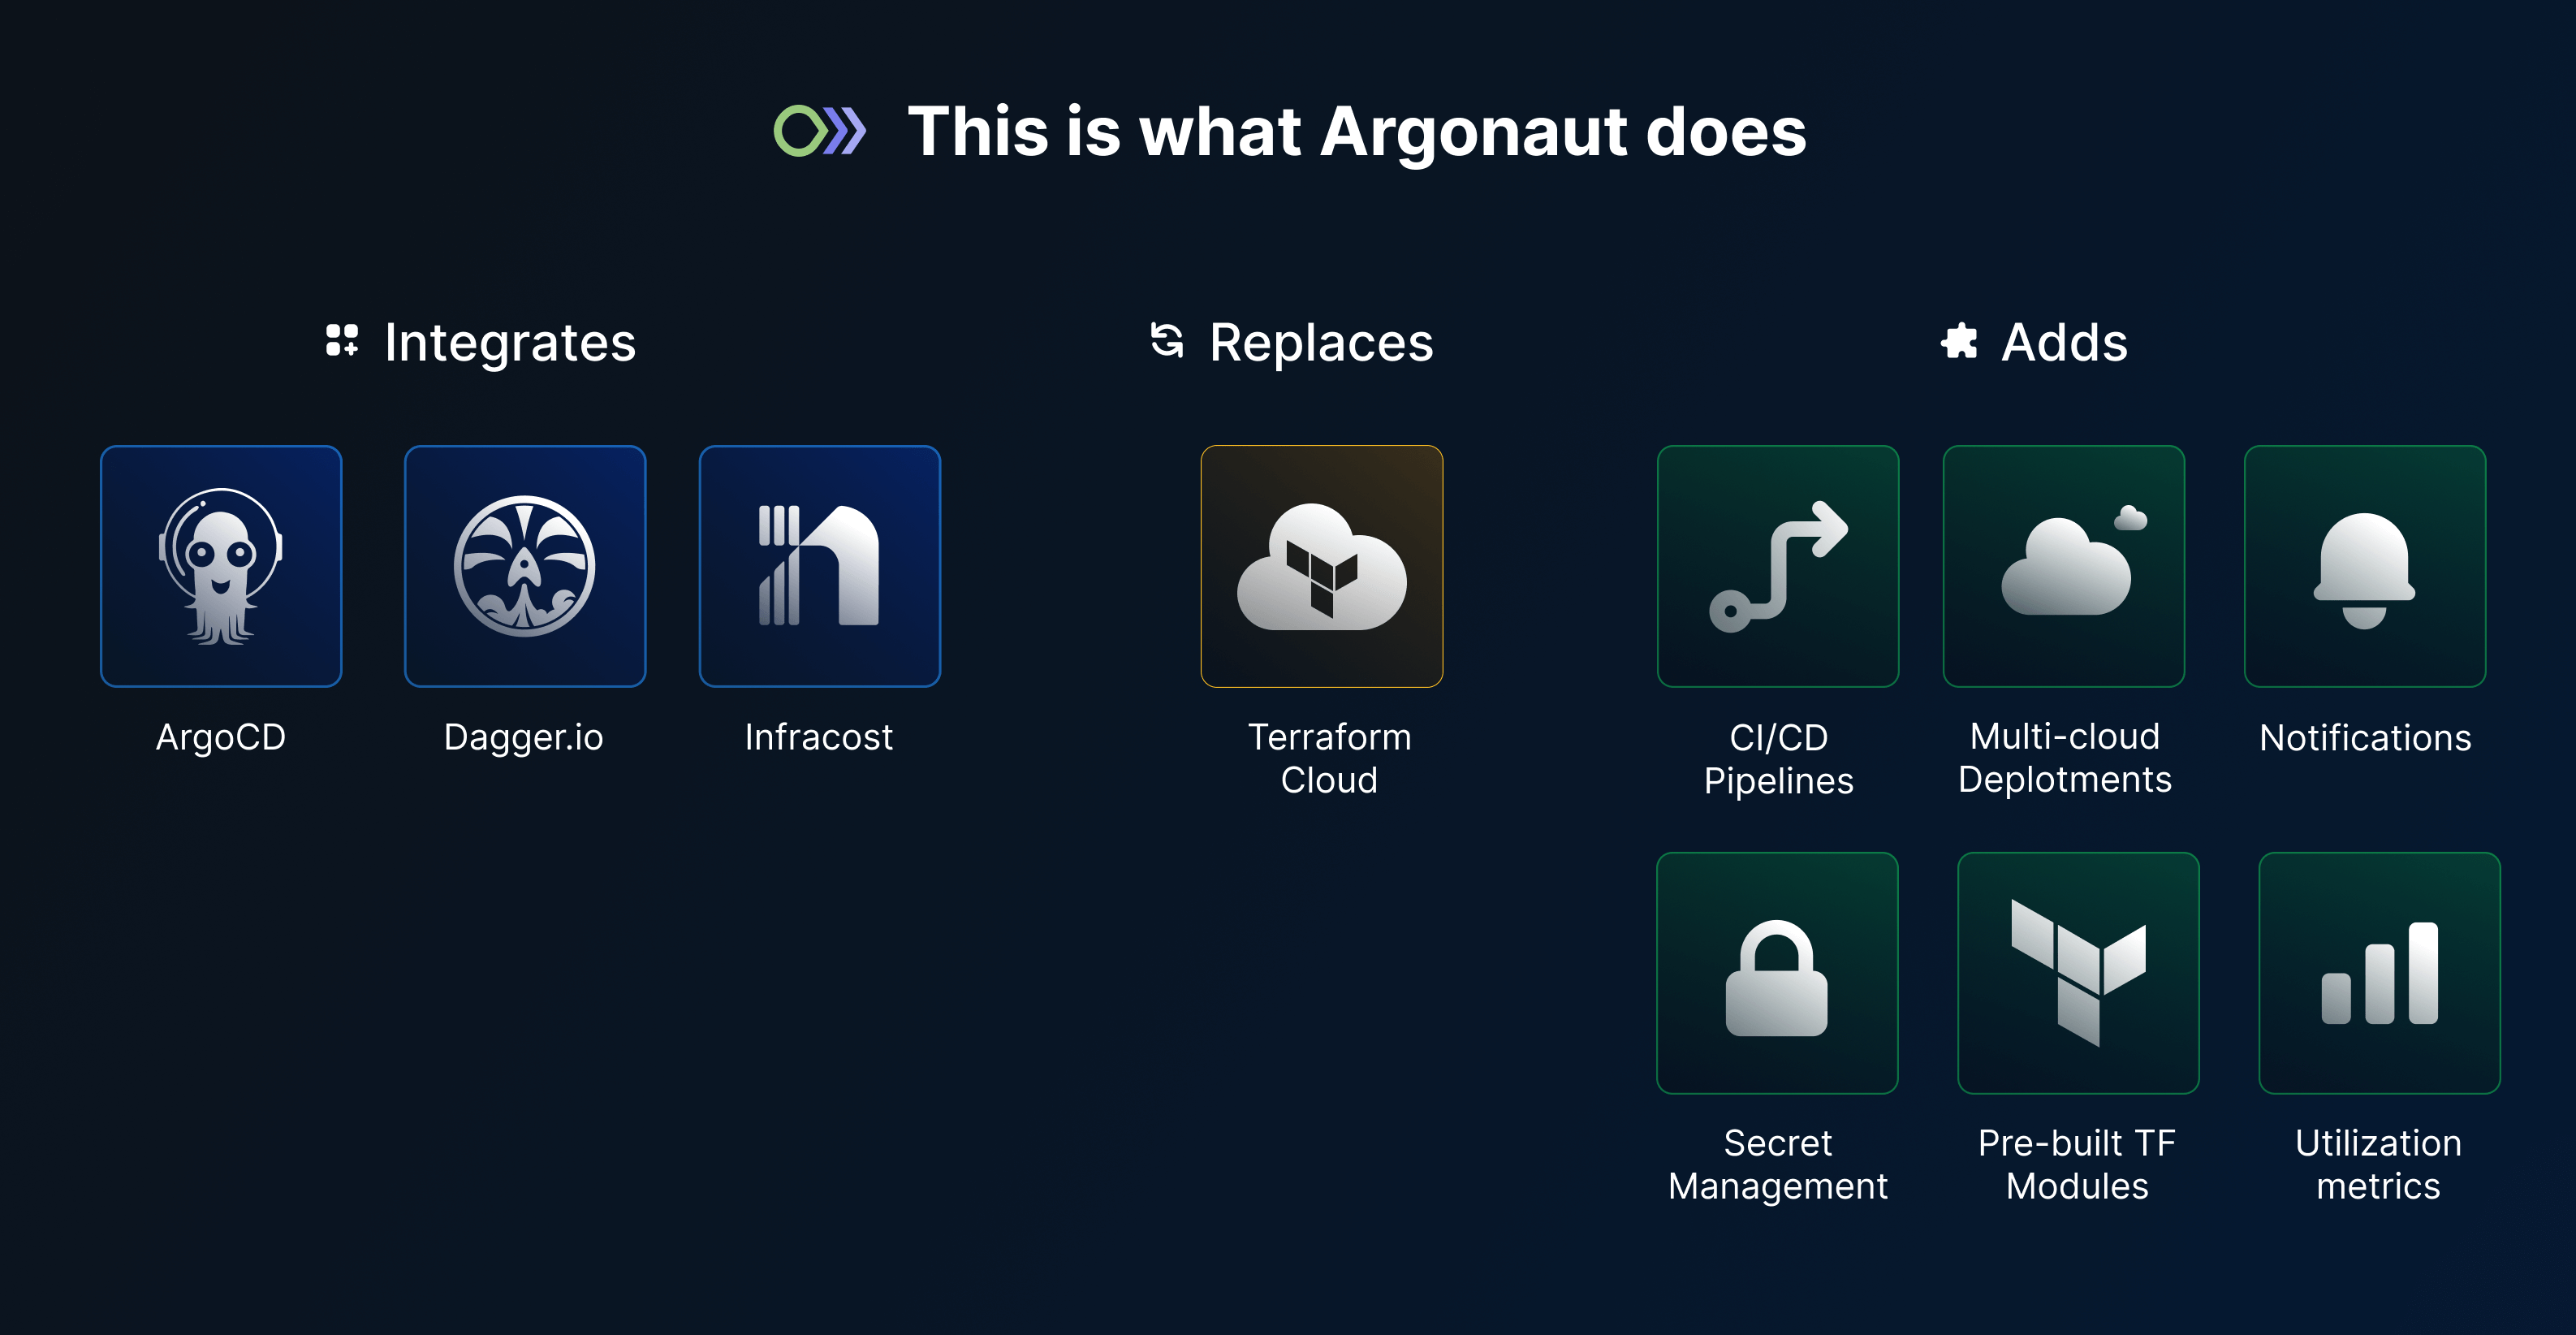 What Argonaut does